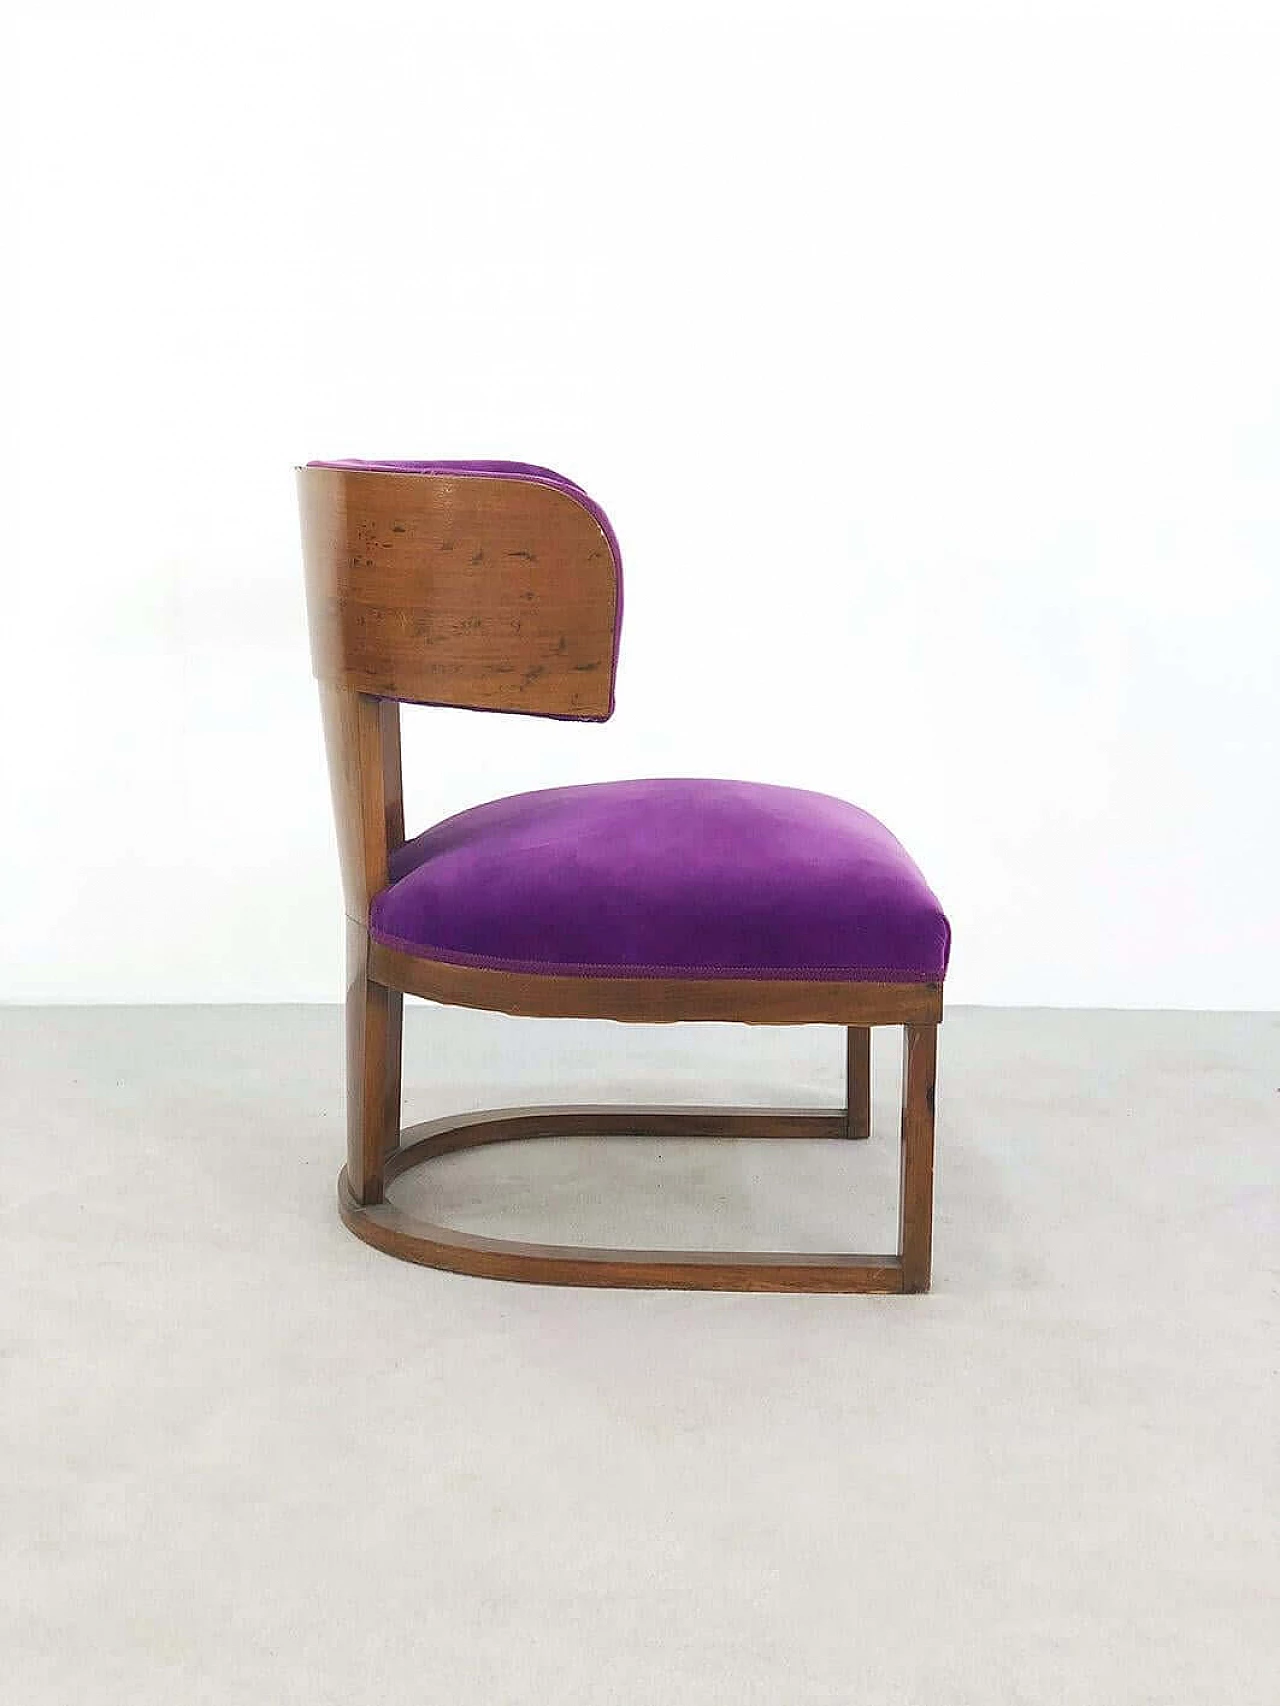 Ernesto Lapadula's armchair in wood and purple velvet, 1930s 1466323